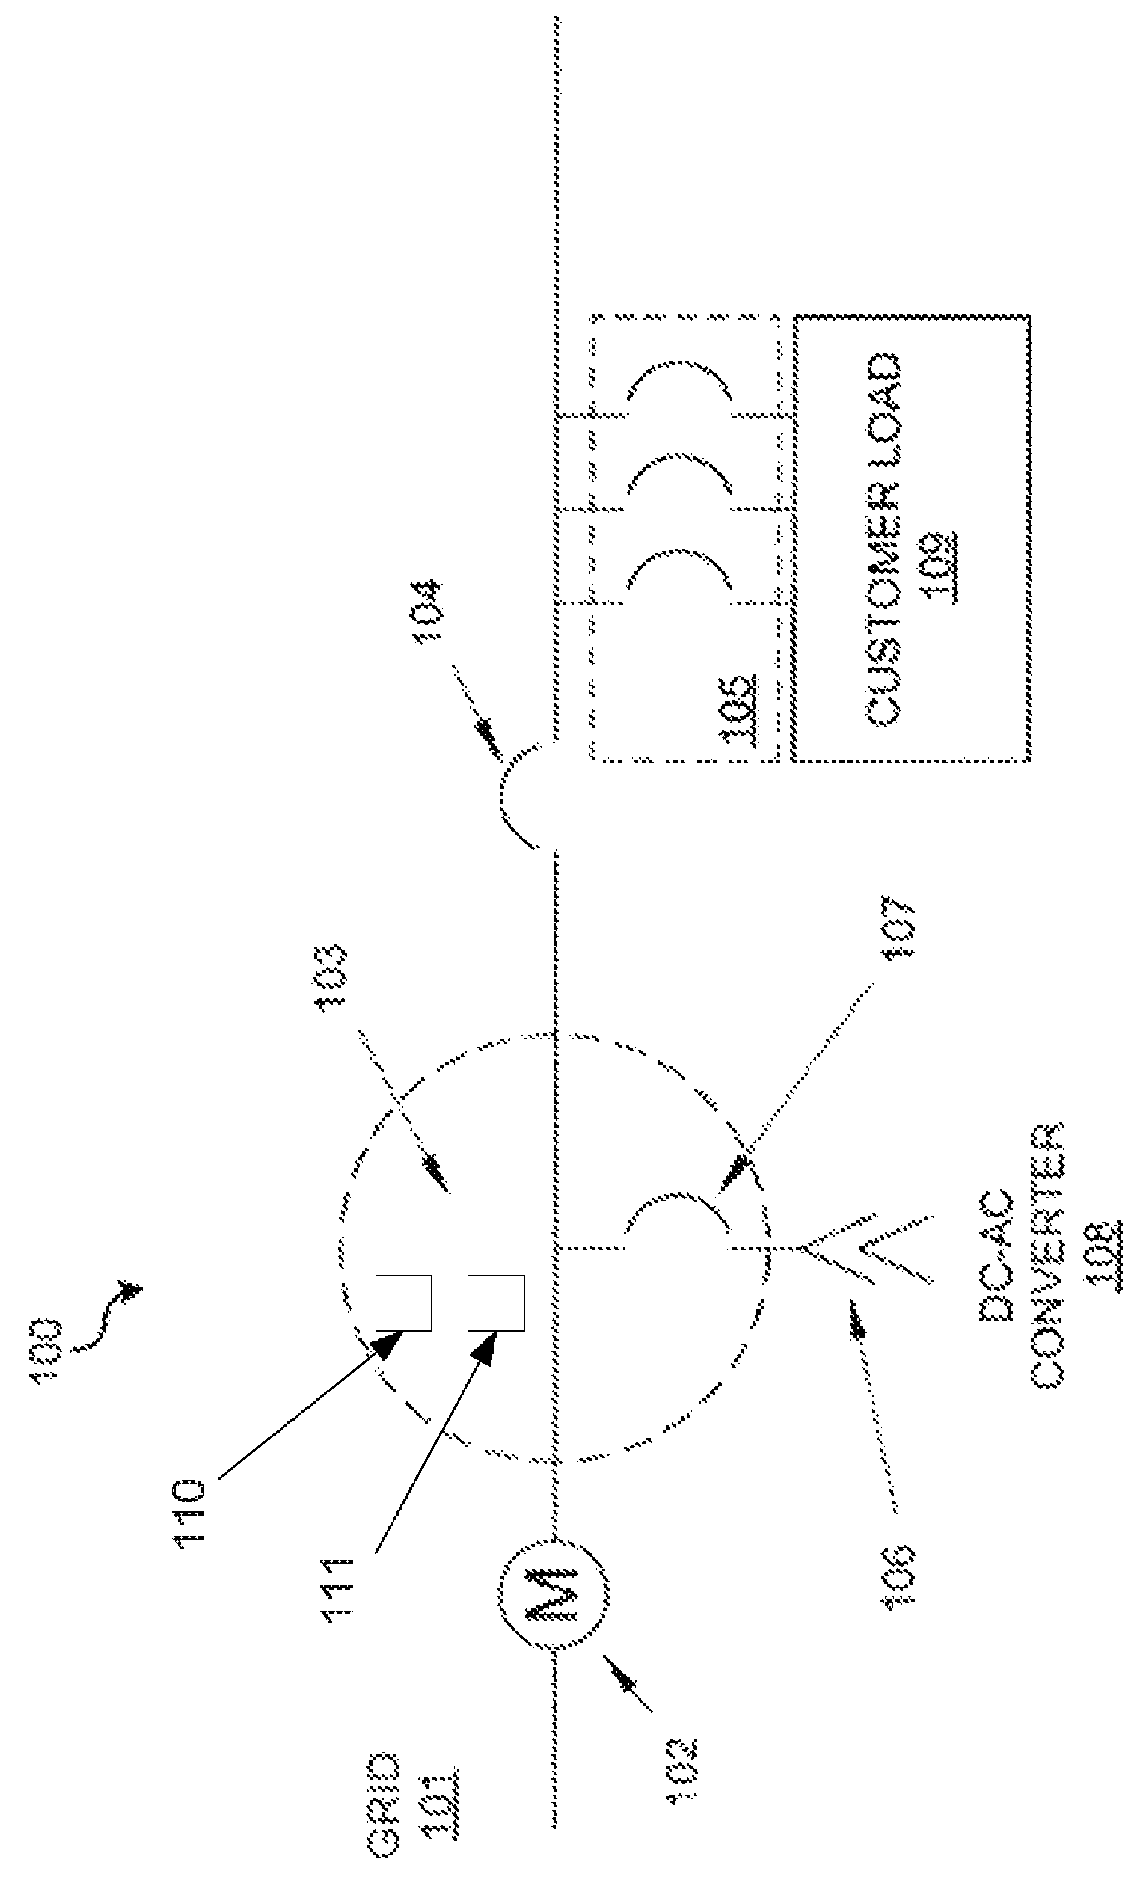 Interconnection meter socket adapters